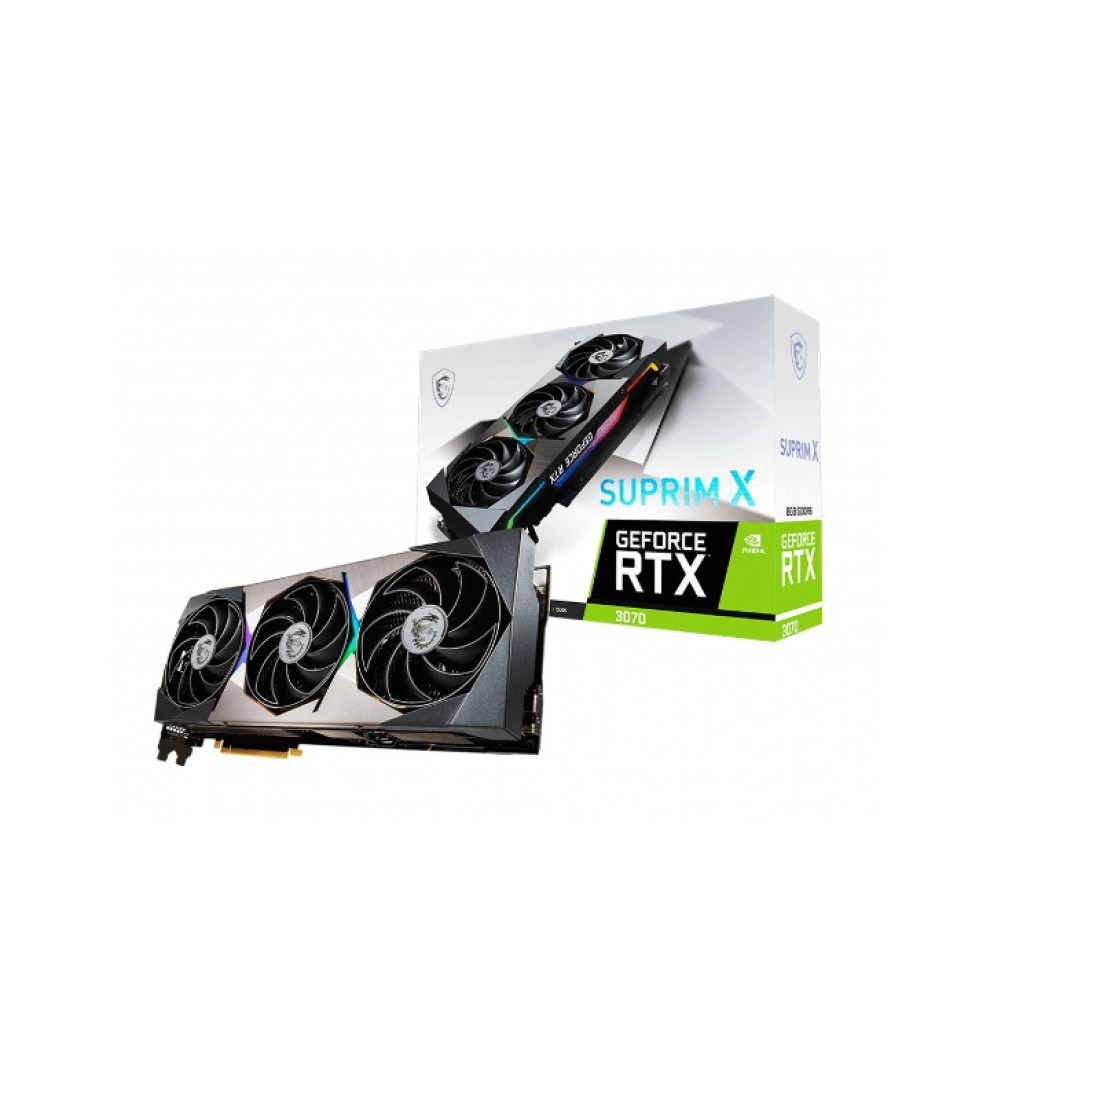 Buy MSI GeForce RTX™ 3070 SUPRIM X 8G GDDR6 Graphics Card at Best Price